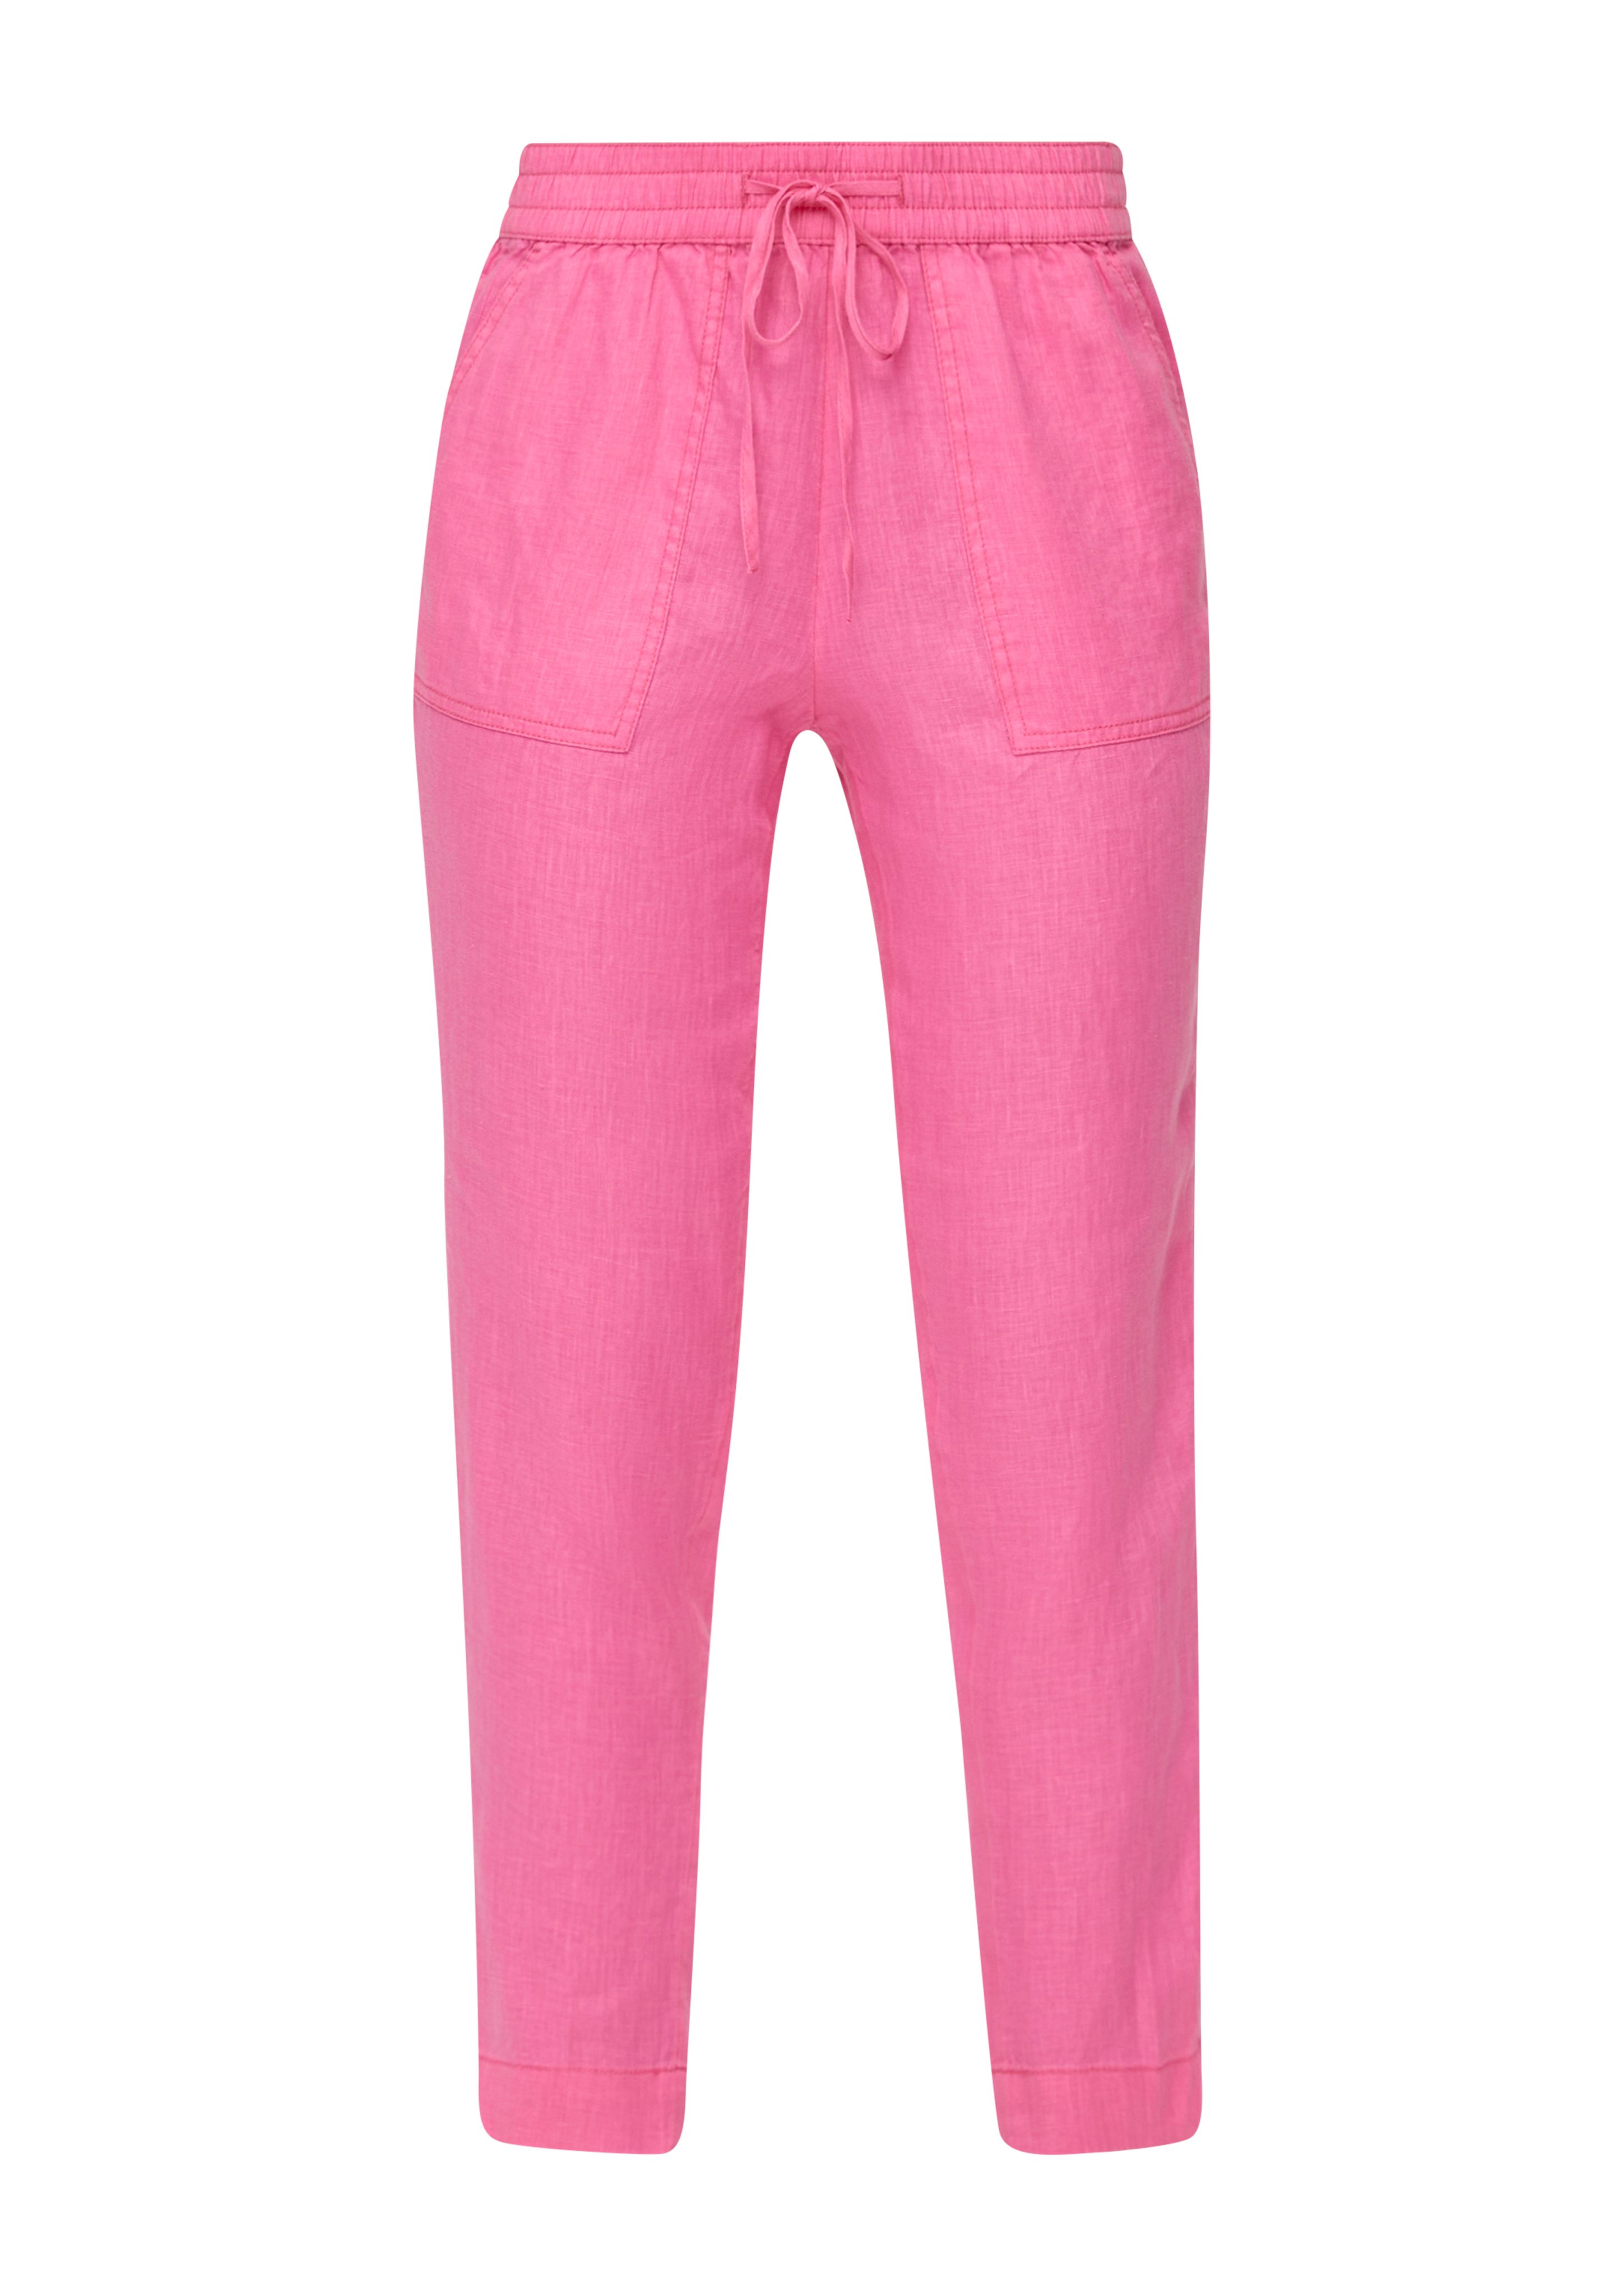 aus Relaxed: 7/8-Hose Jogpants s.Oliver pink Leinen